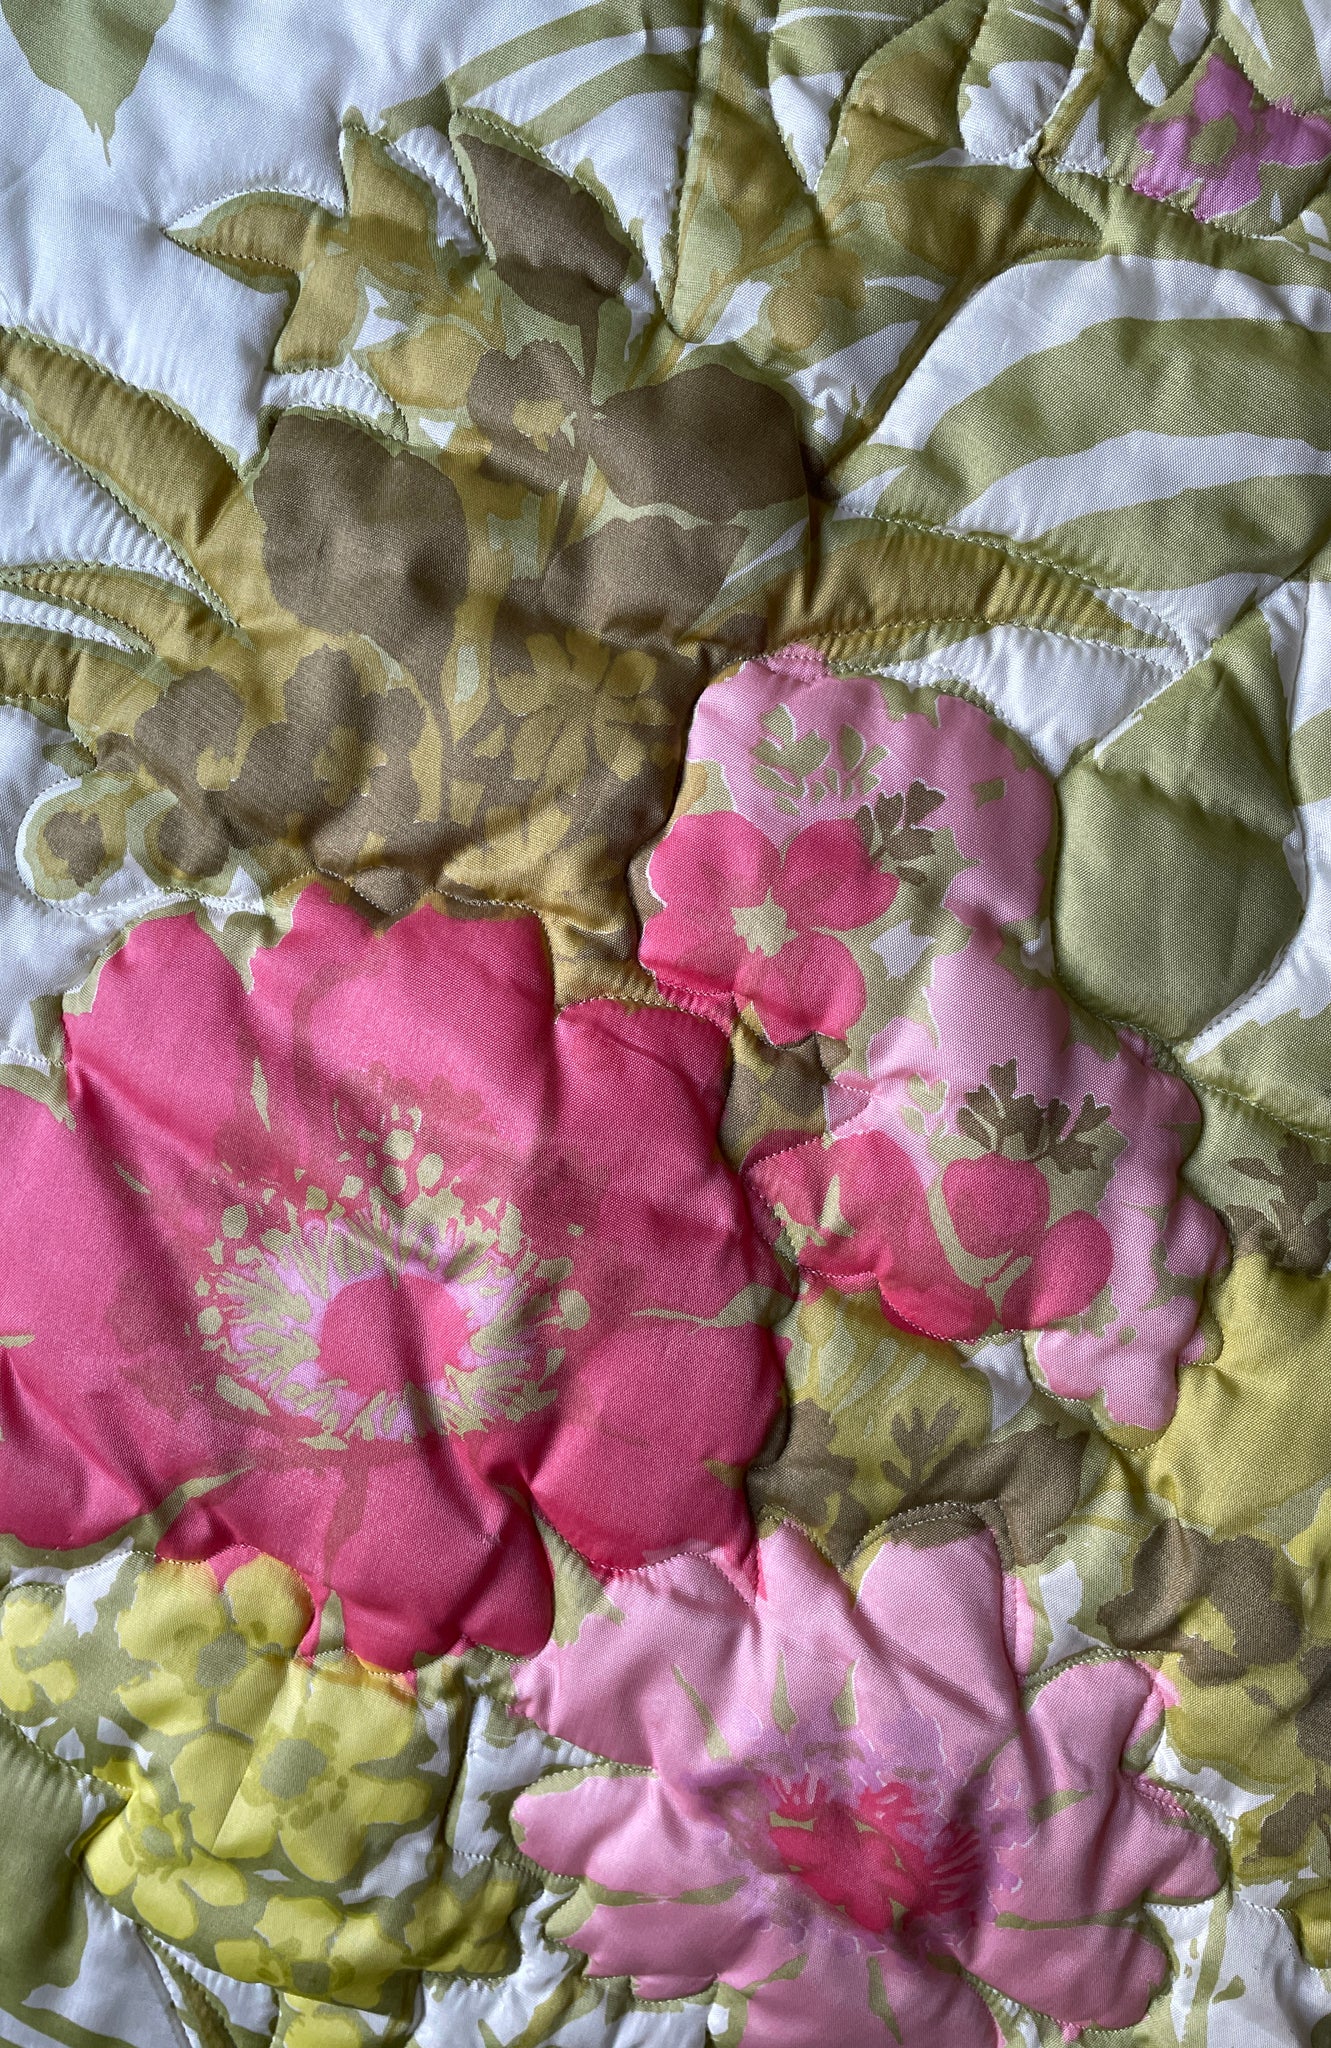 Made To Order - Vintage Floral Bedspread Bomber Jacket, size XS - XXL